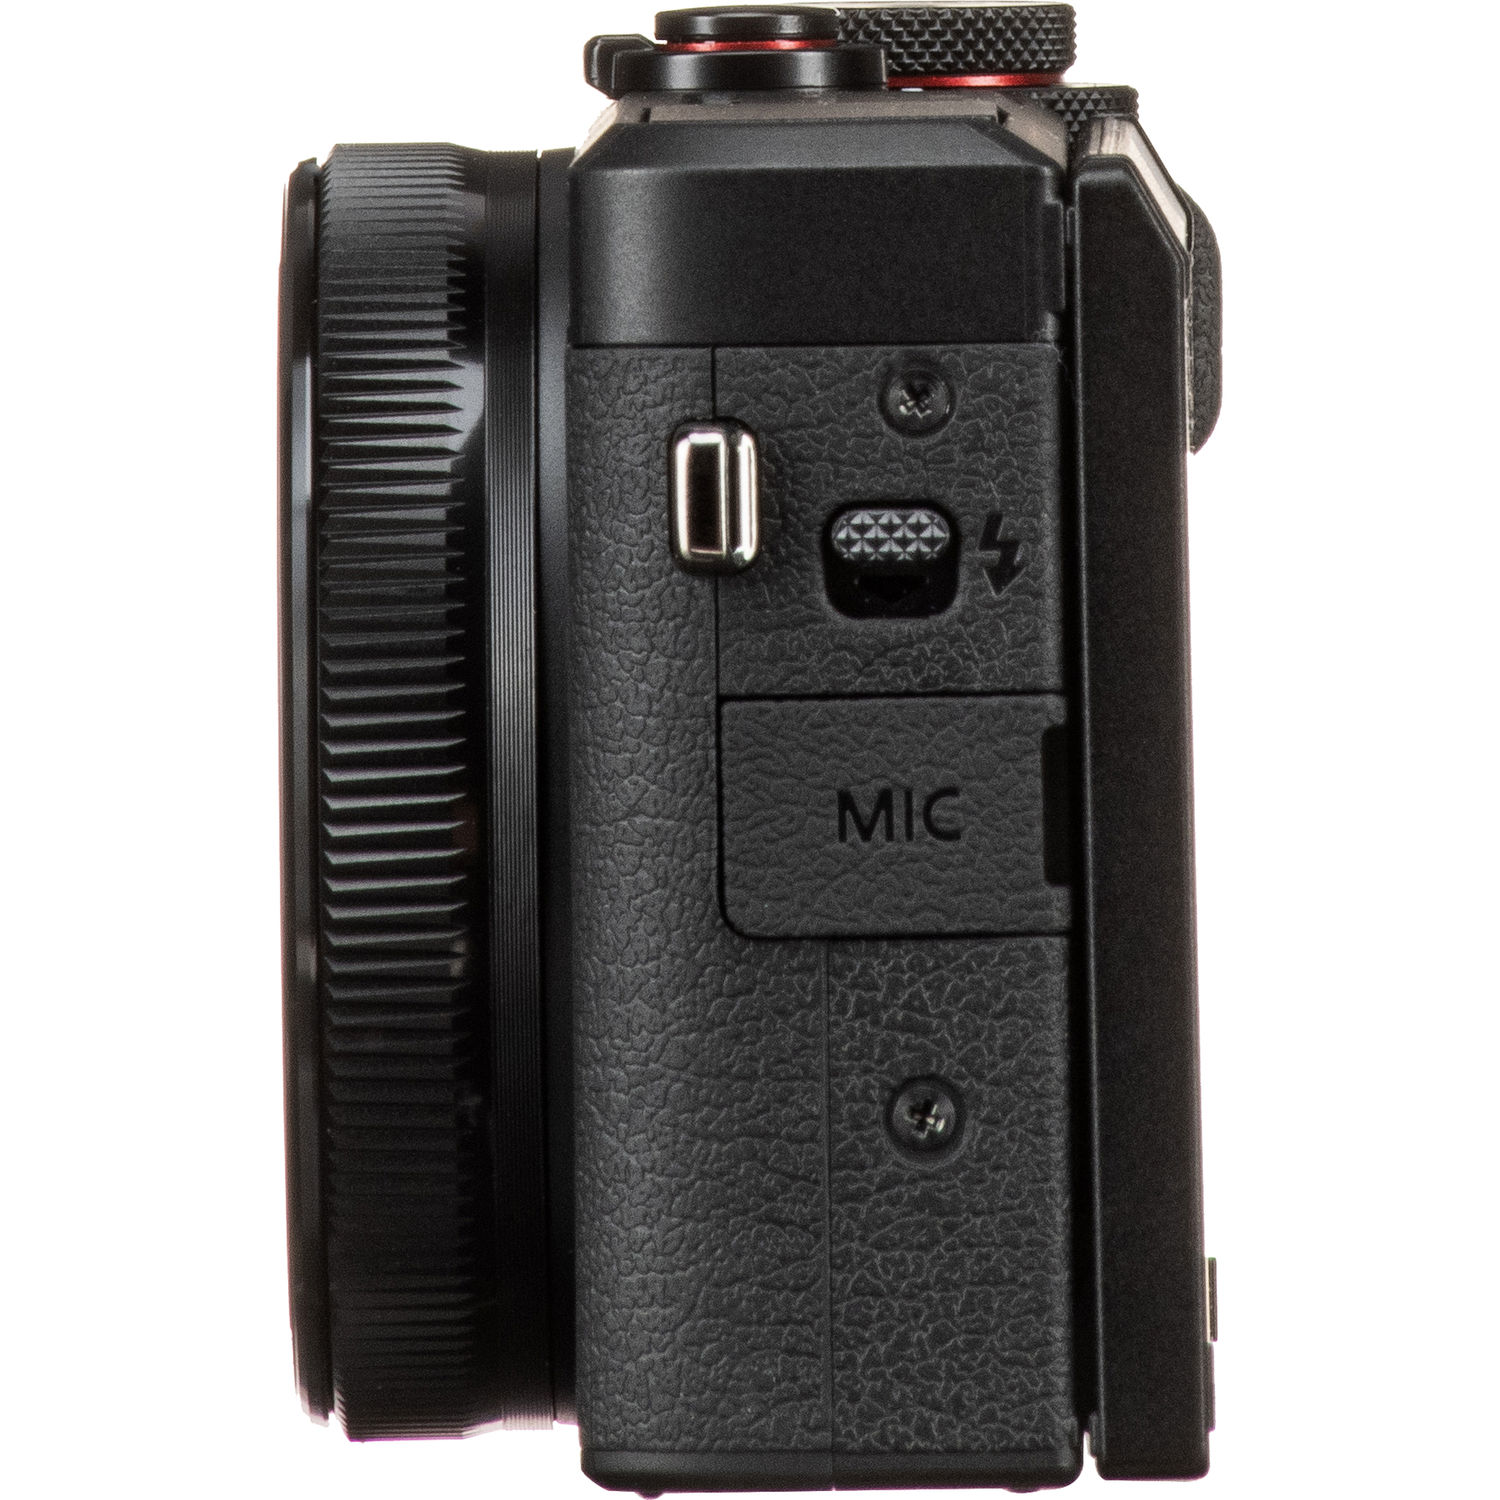 Canon Powershot G7 X Mark Iii Digital Camera Video Creator Kit